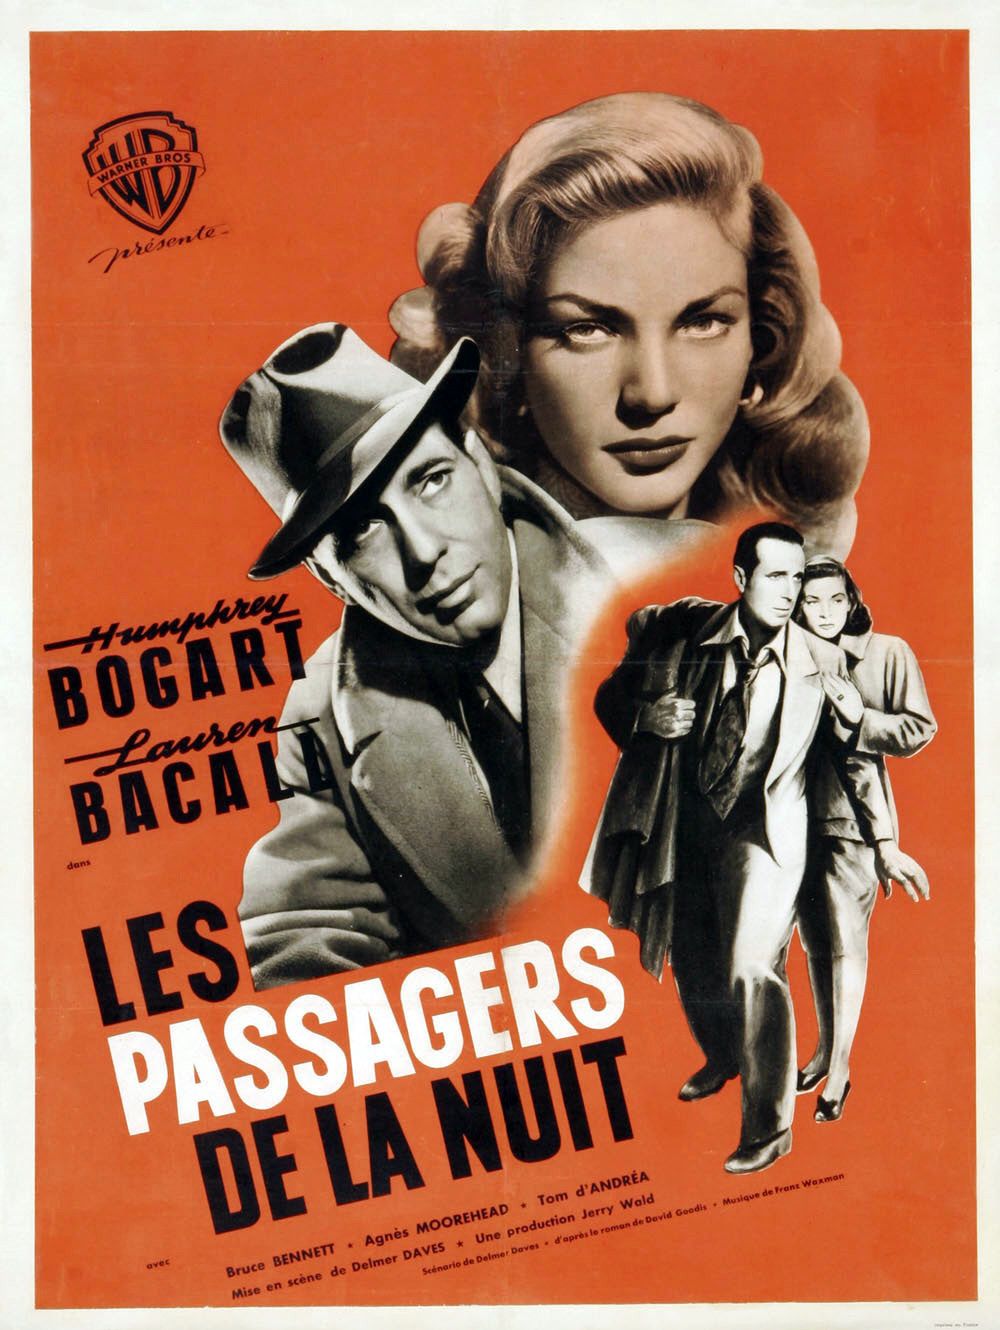 IMP Awards > 1947 Movie Poster Gallery > Dark Passage > XLG Image